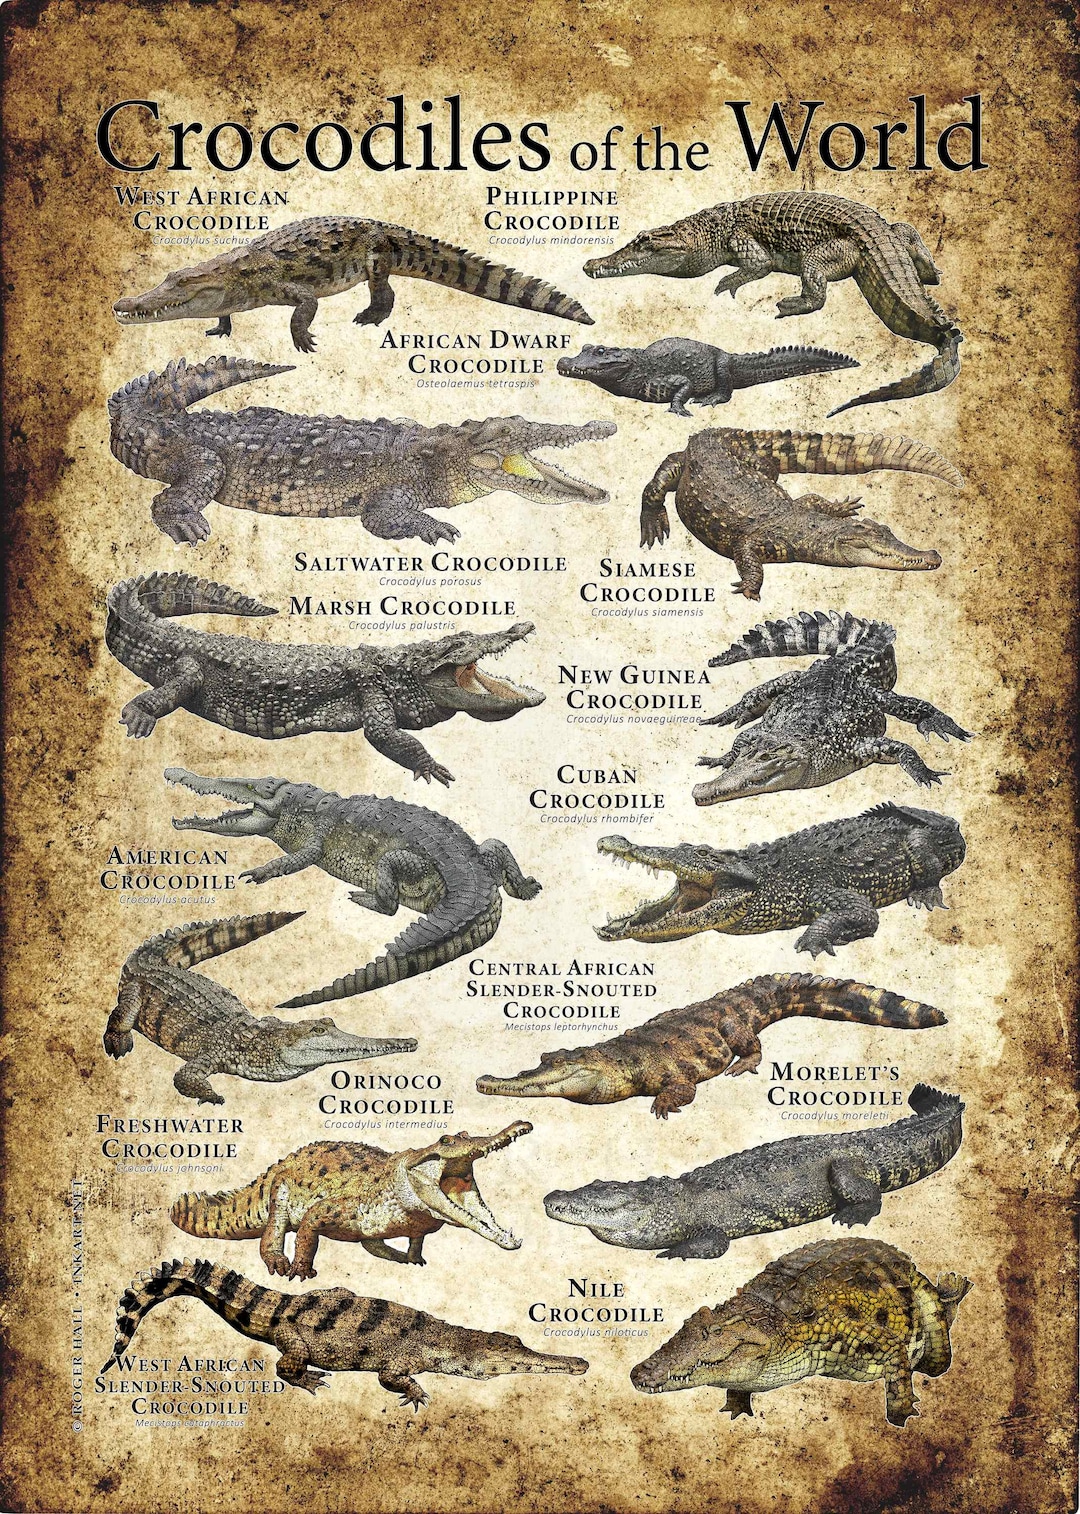 Crocodiles of the World Poster Print - Etsy